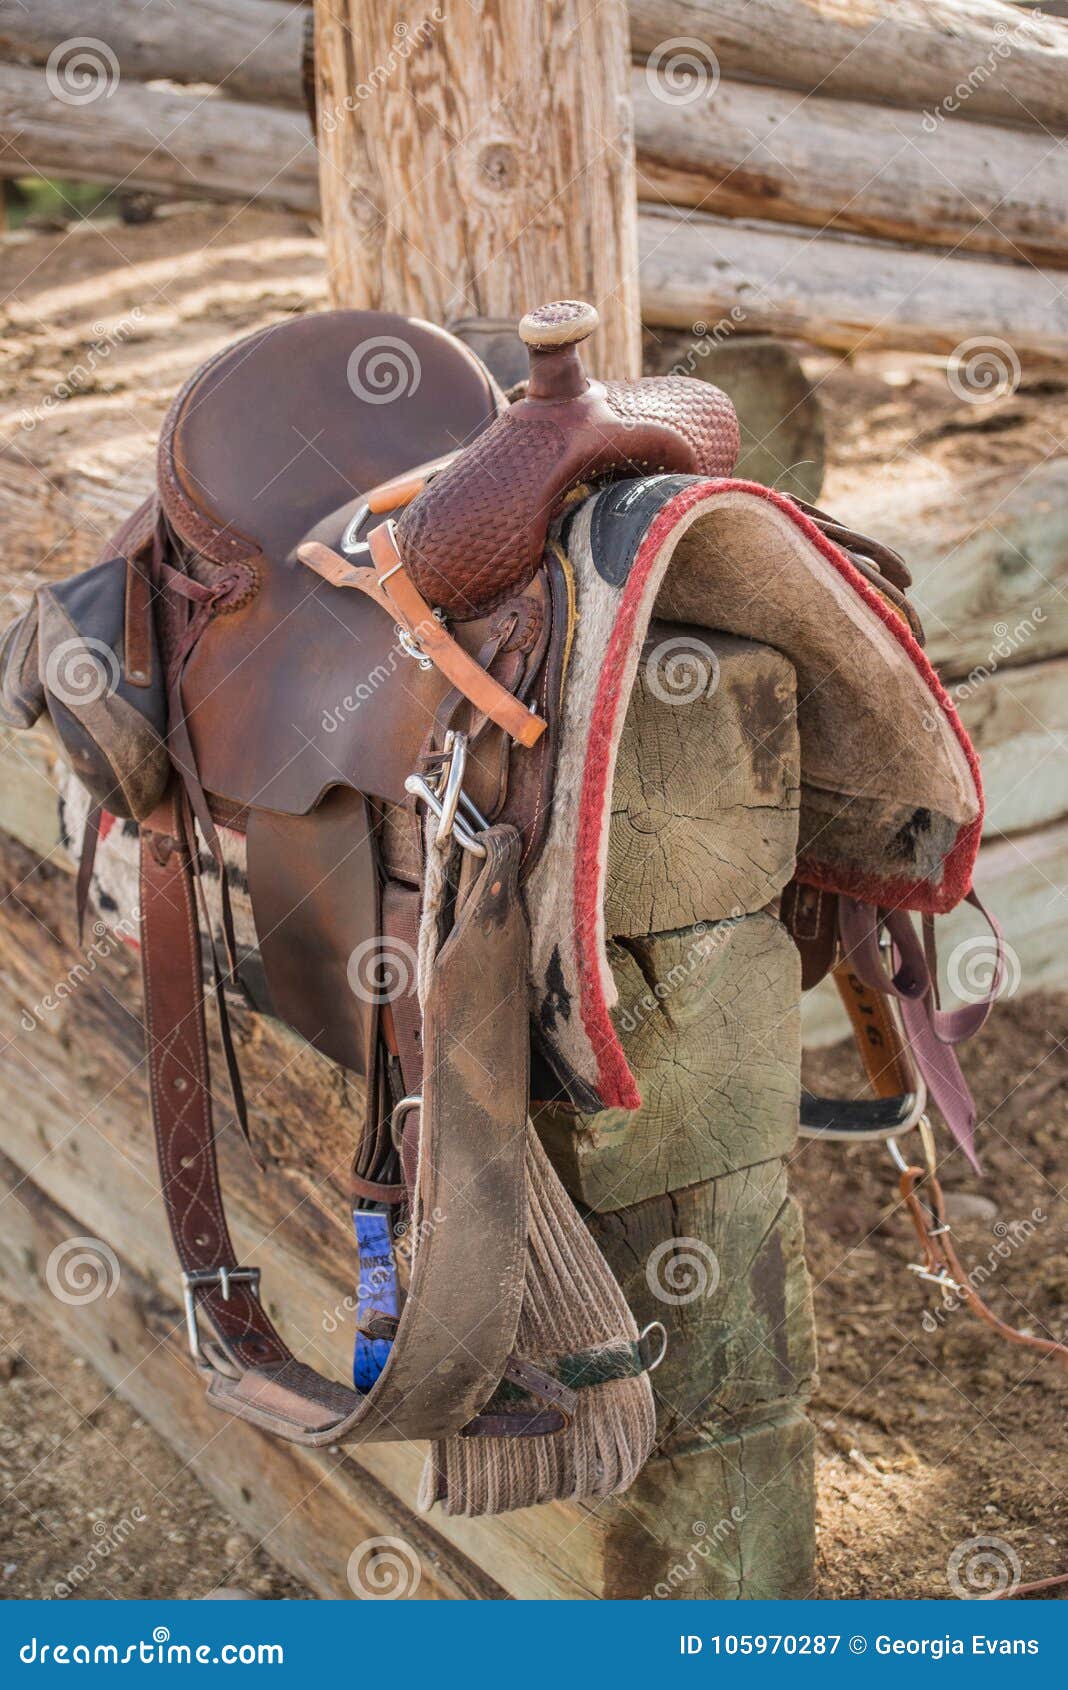 western riding saddle and horse blanket